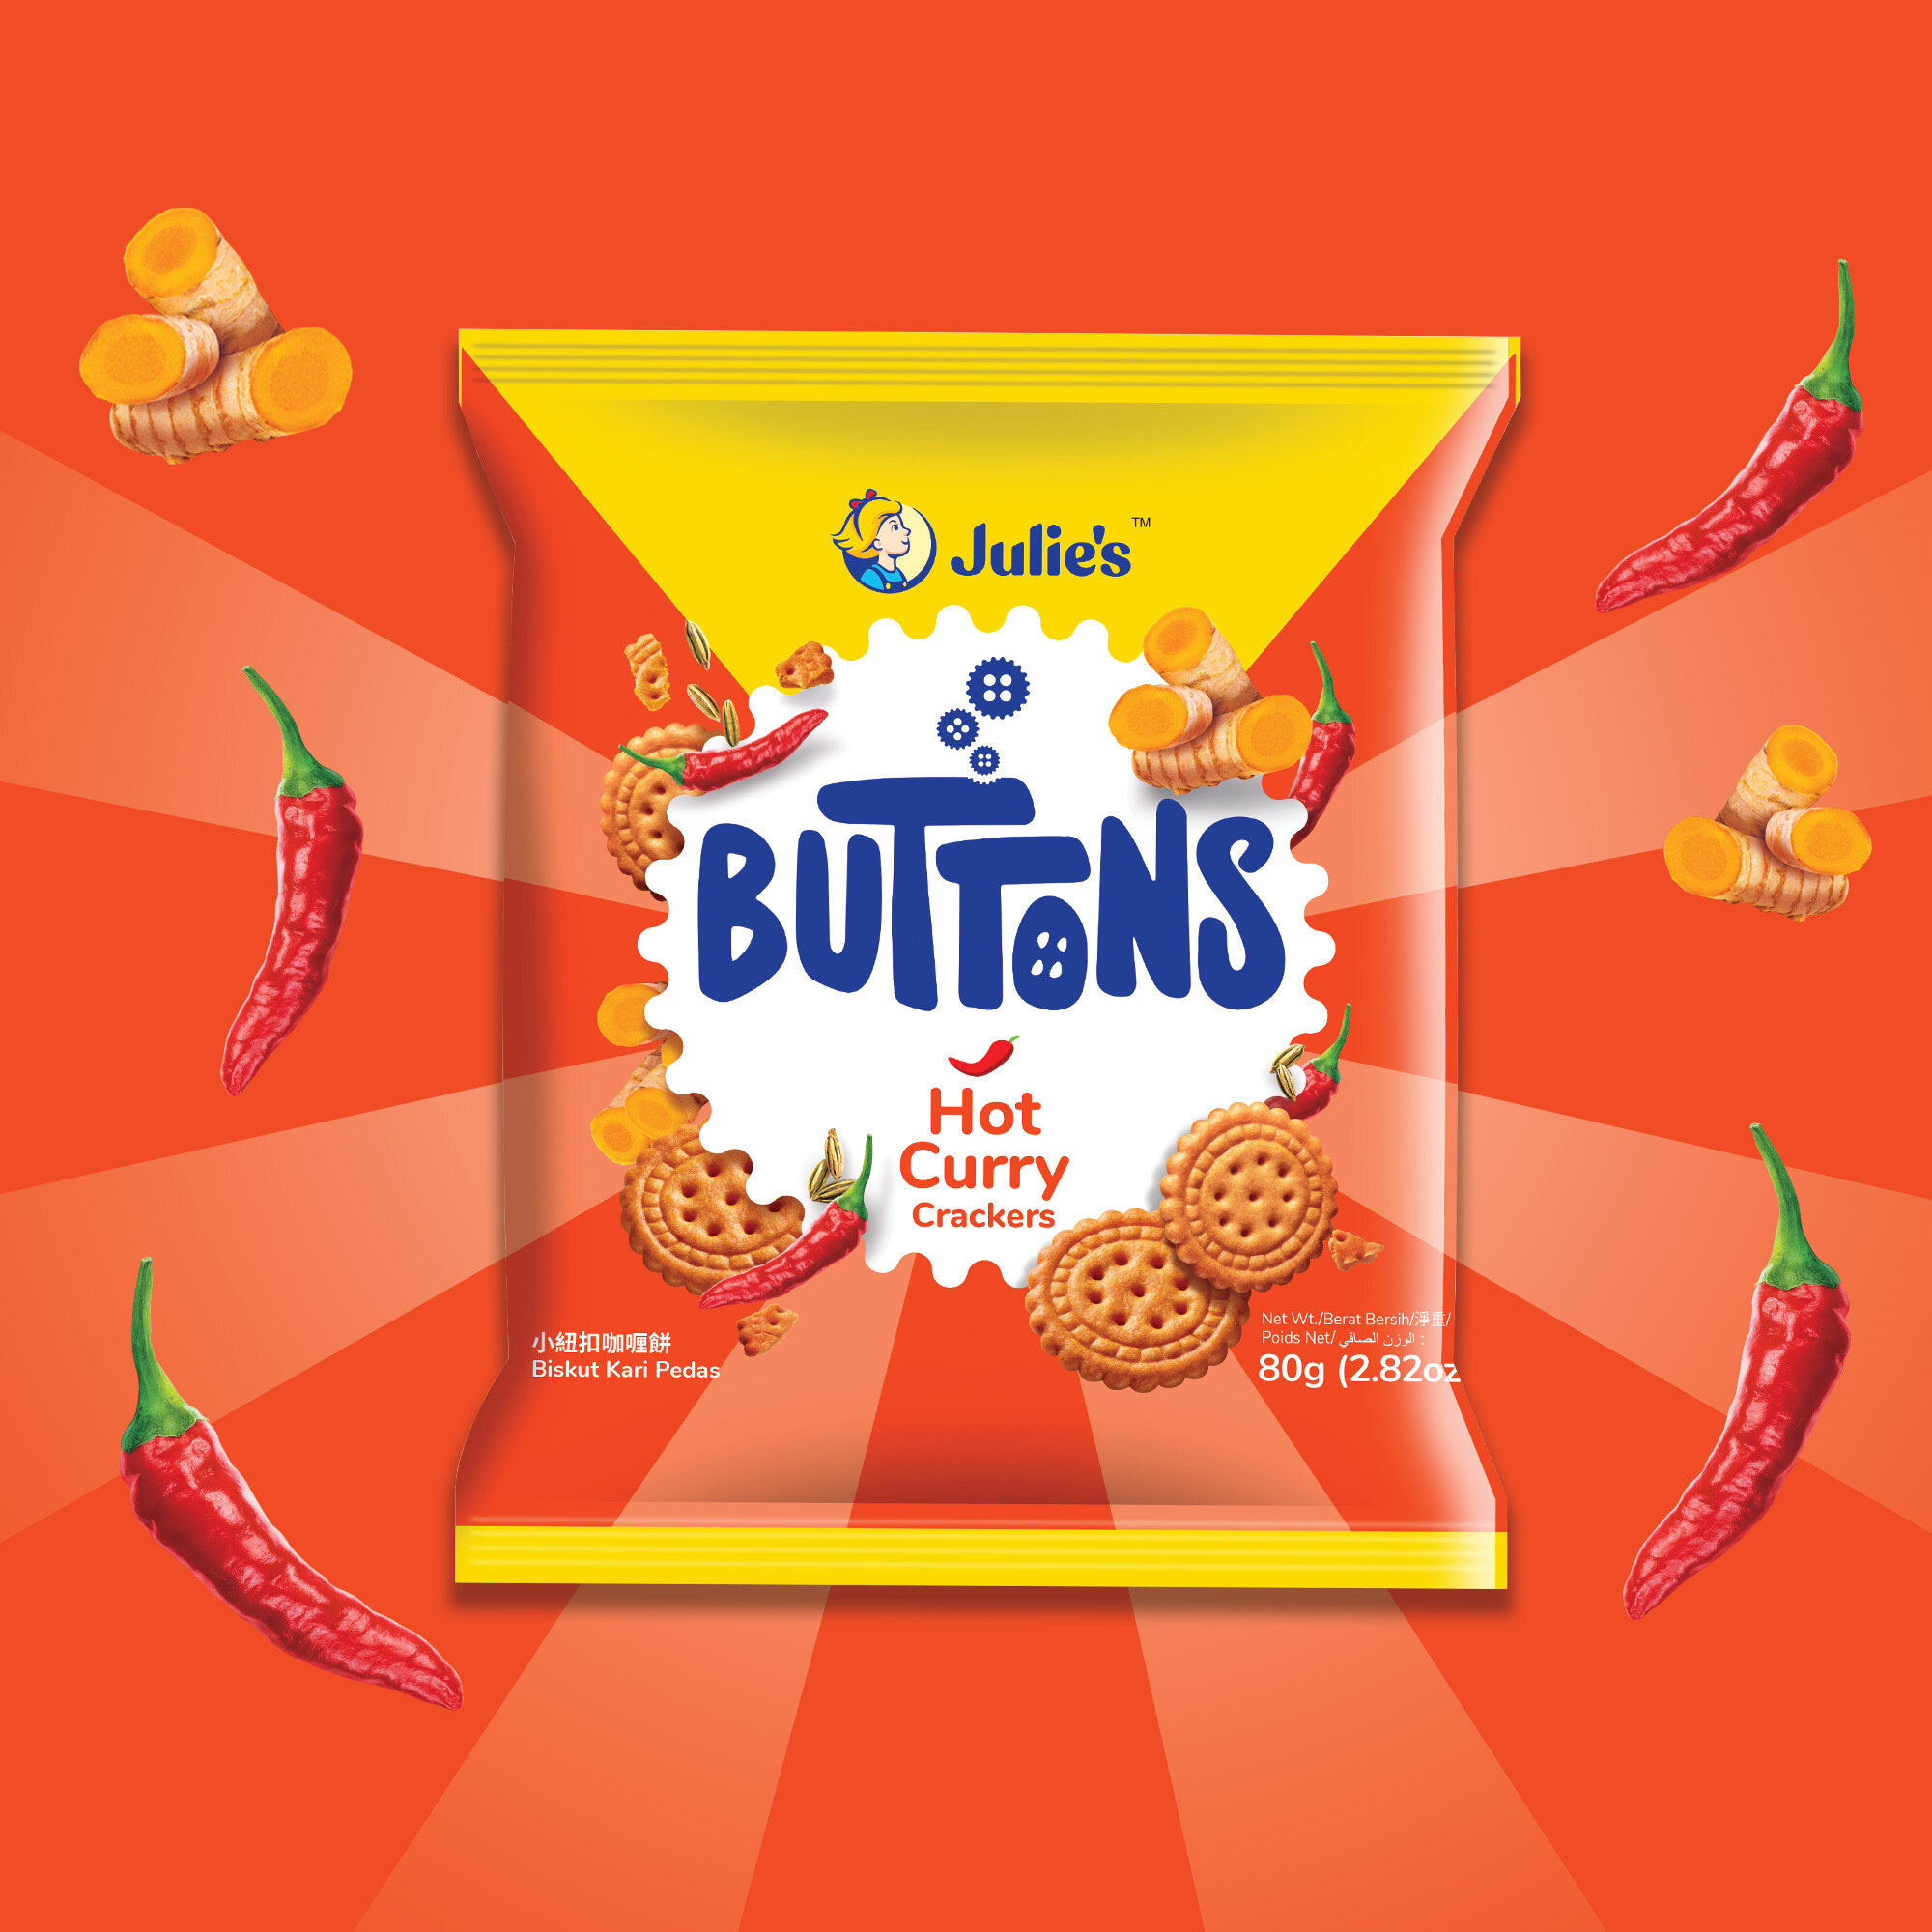 Julie's Buttons Hot Curry Crackers 80g x 6 packs